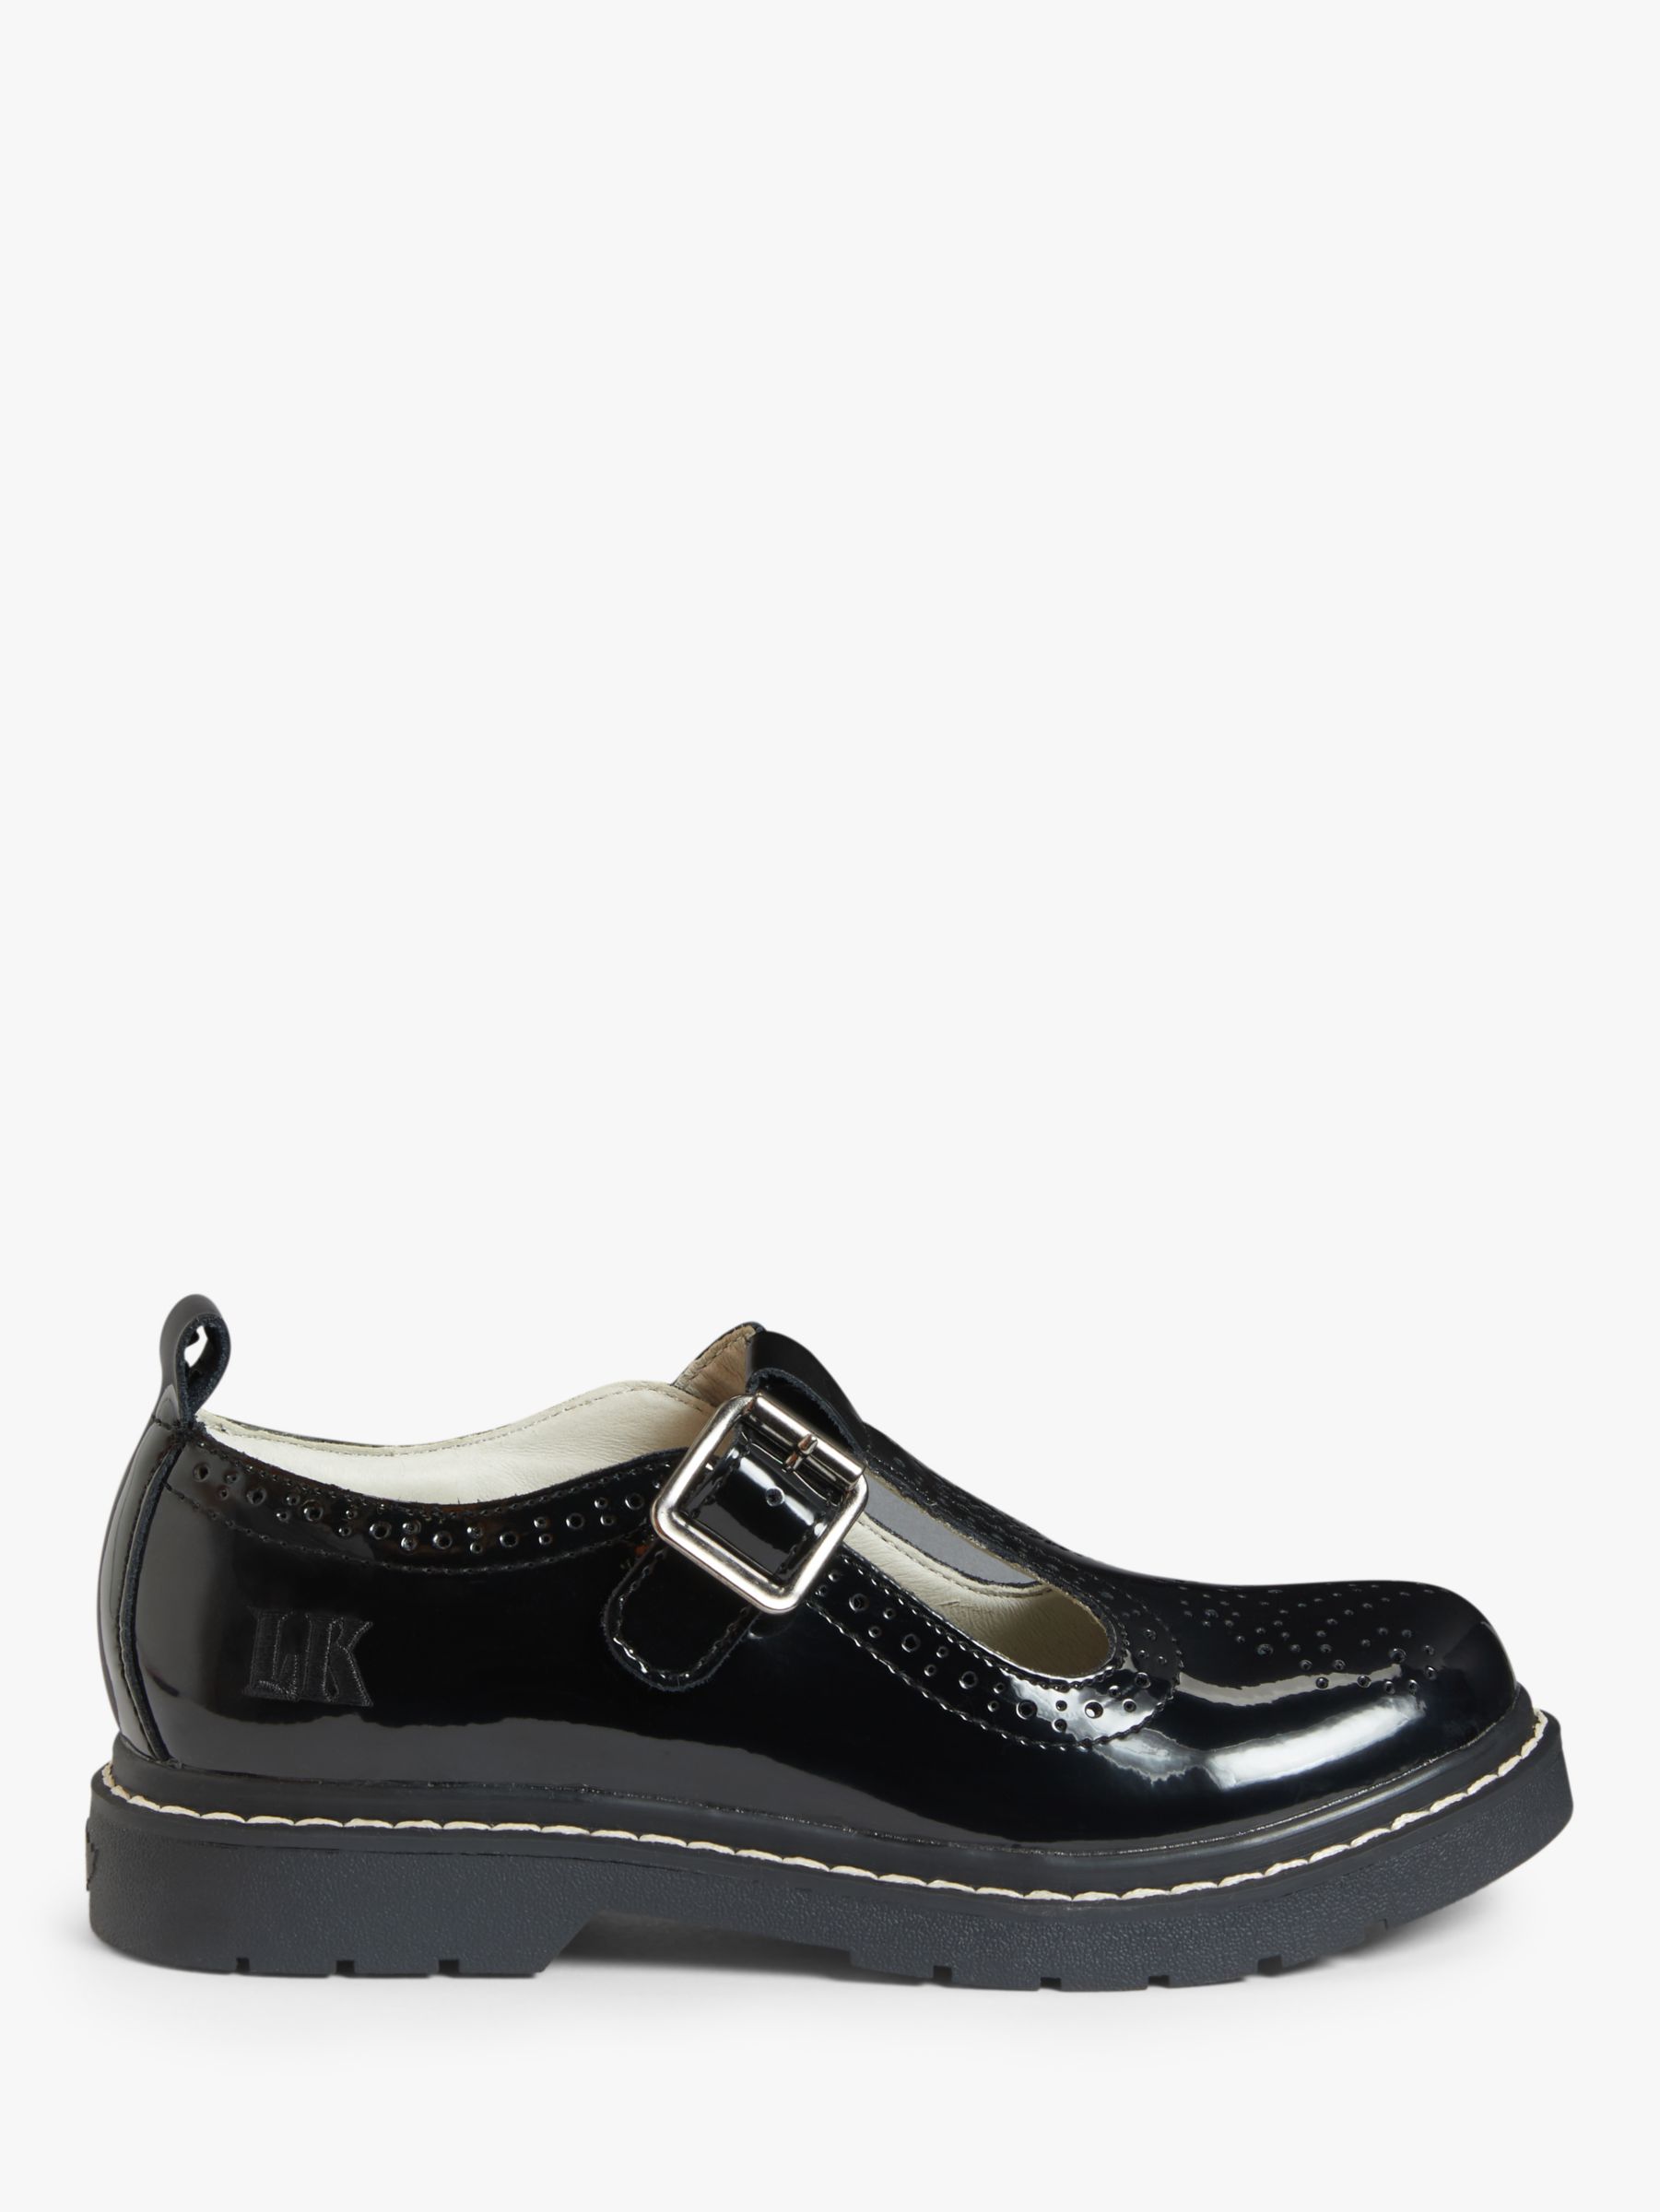 Lelli Kelly Children's Meryl Leather School Shoes, Black Patent at John ...